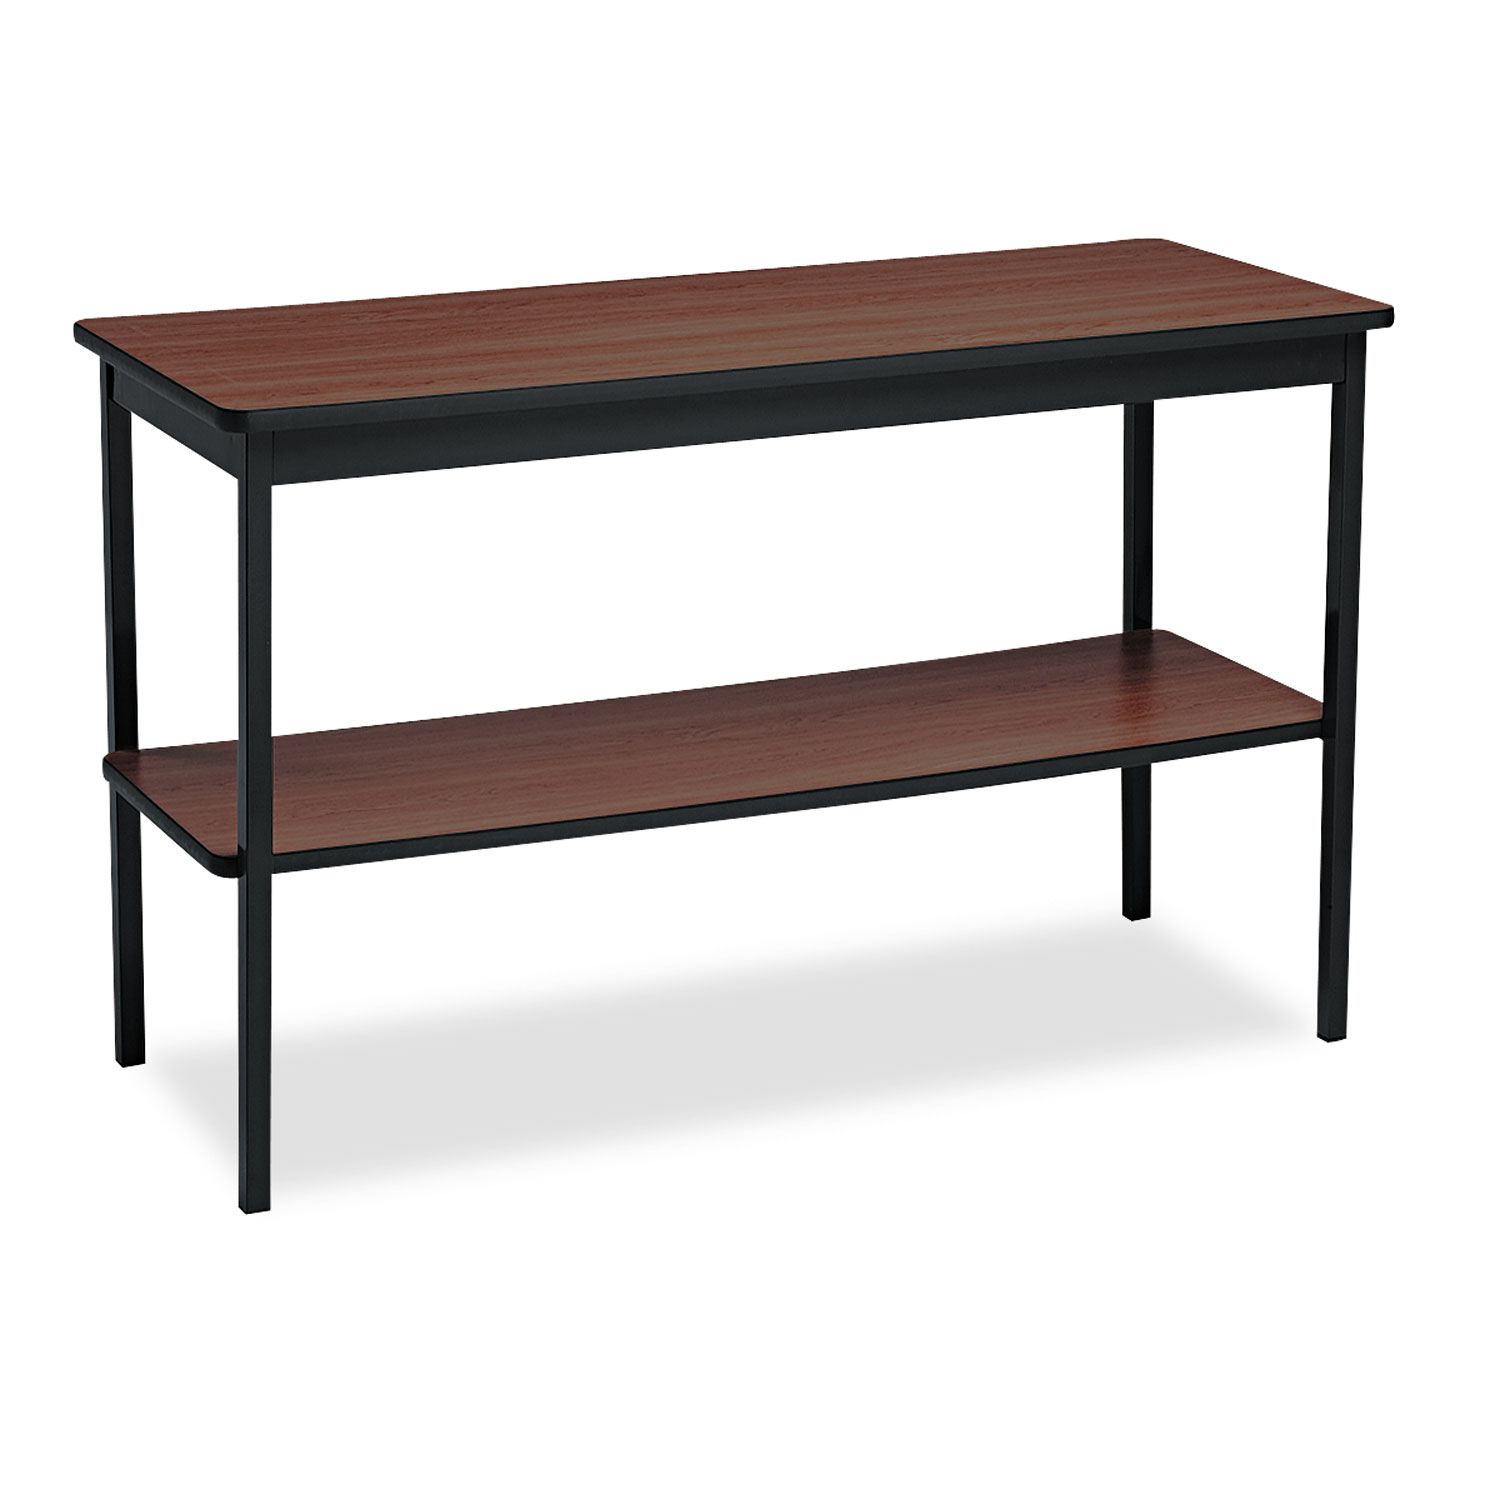  Barricks UTS1848-WA Utility Table with Bottom Shelf, Rectangular, 48w x 18d x 30h, Walnut/Black (BRKUTS1848WA) 